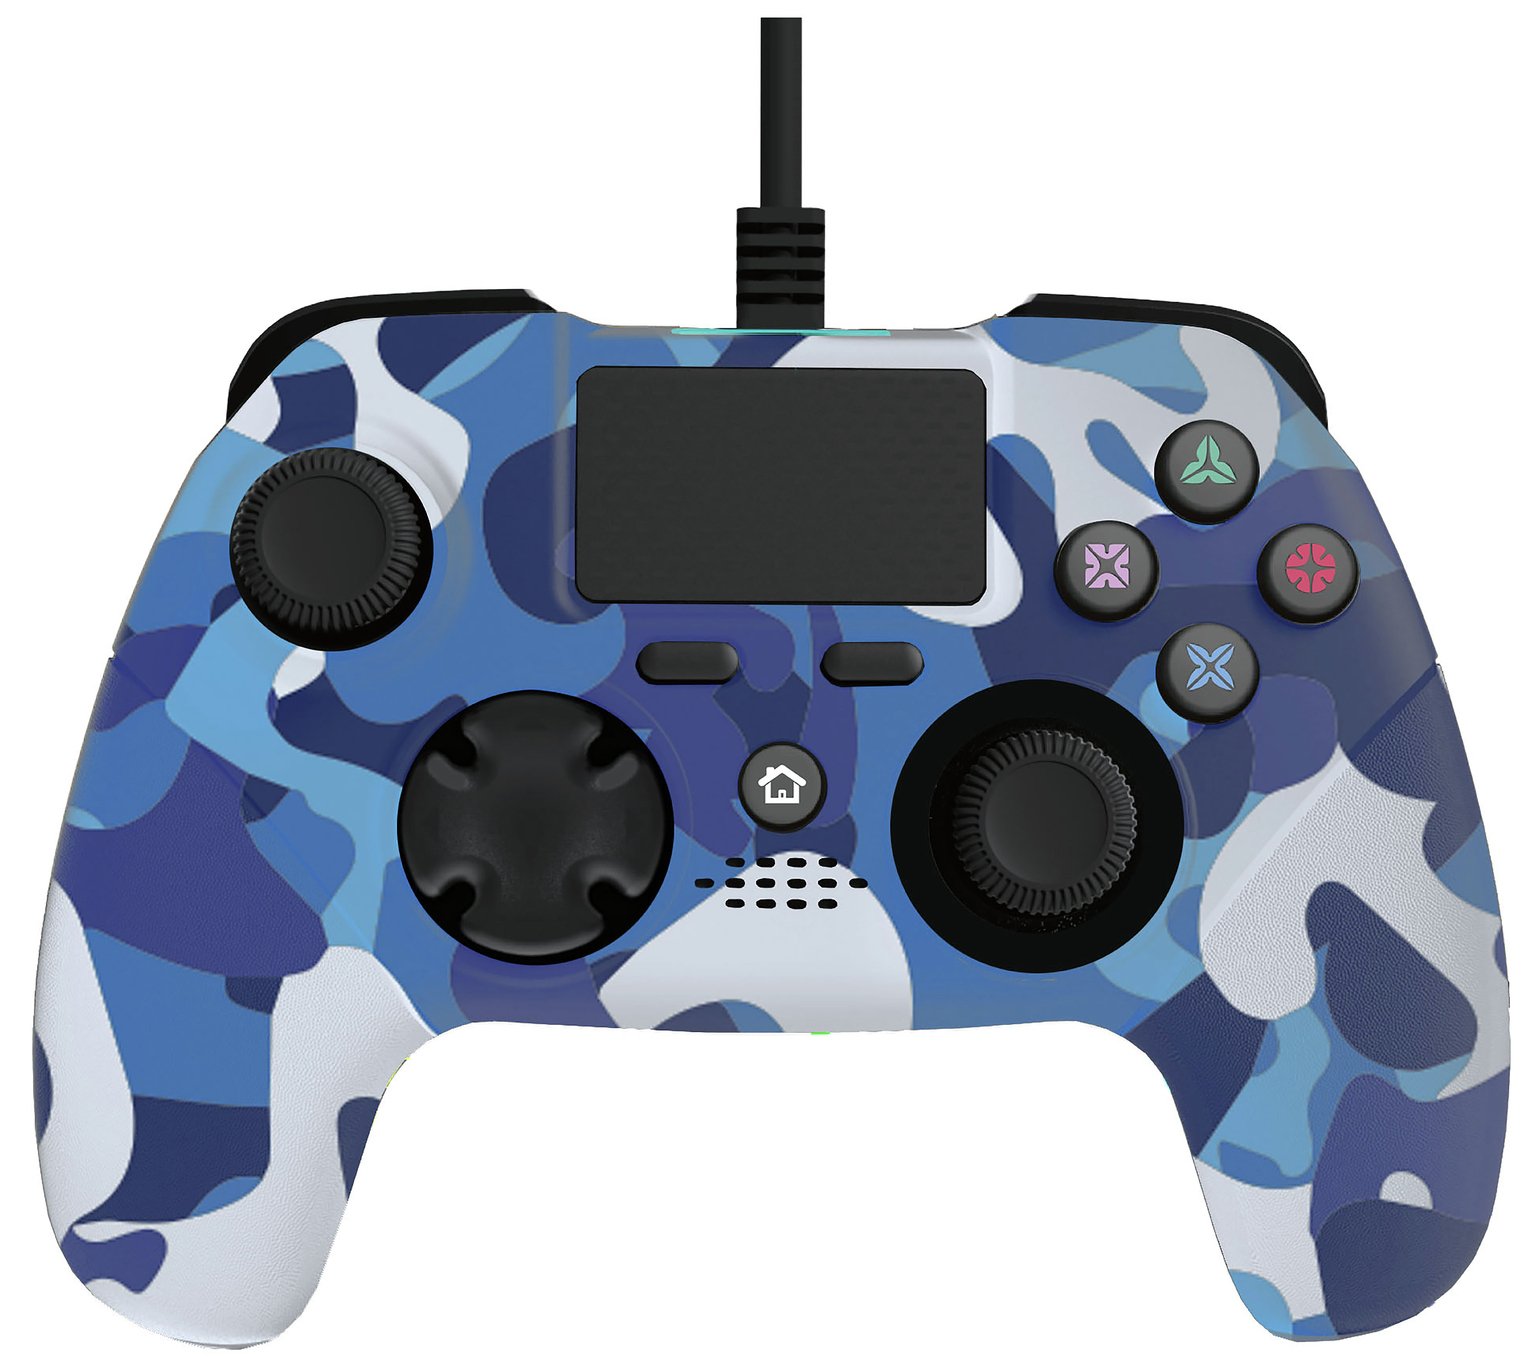 dualshock 4 wireless controller blue camouflage